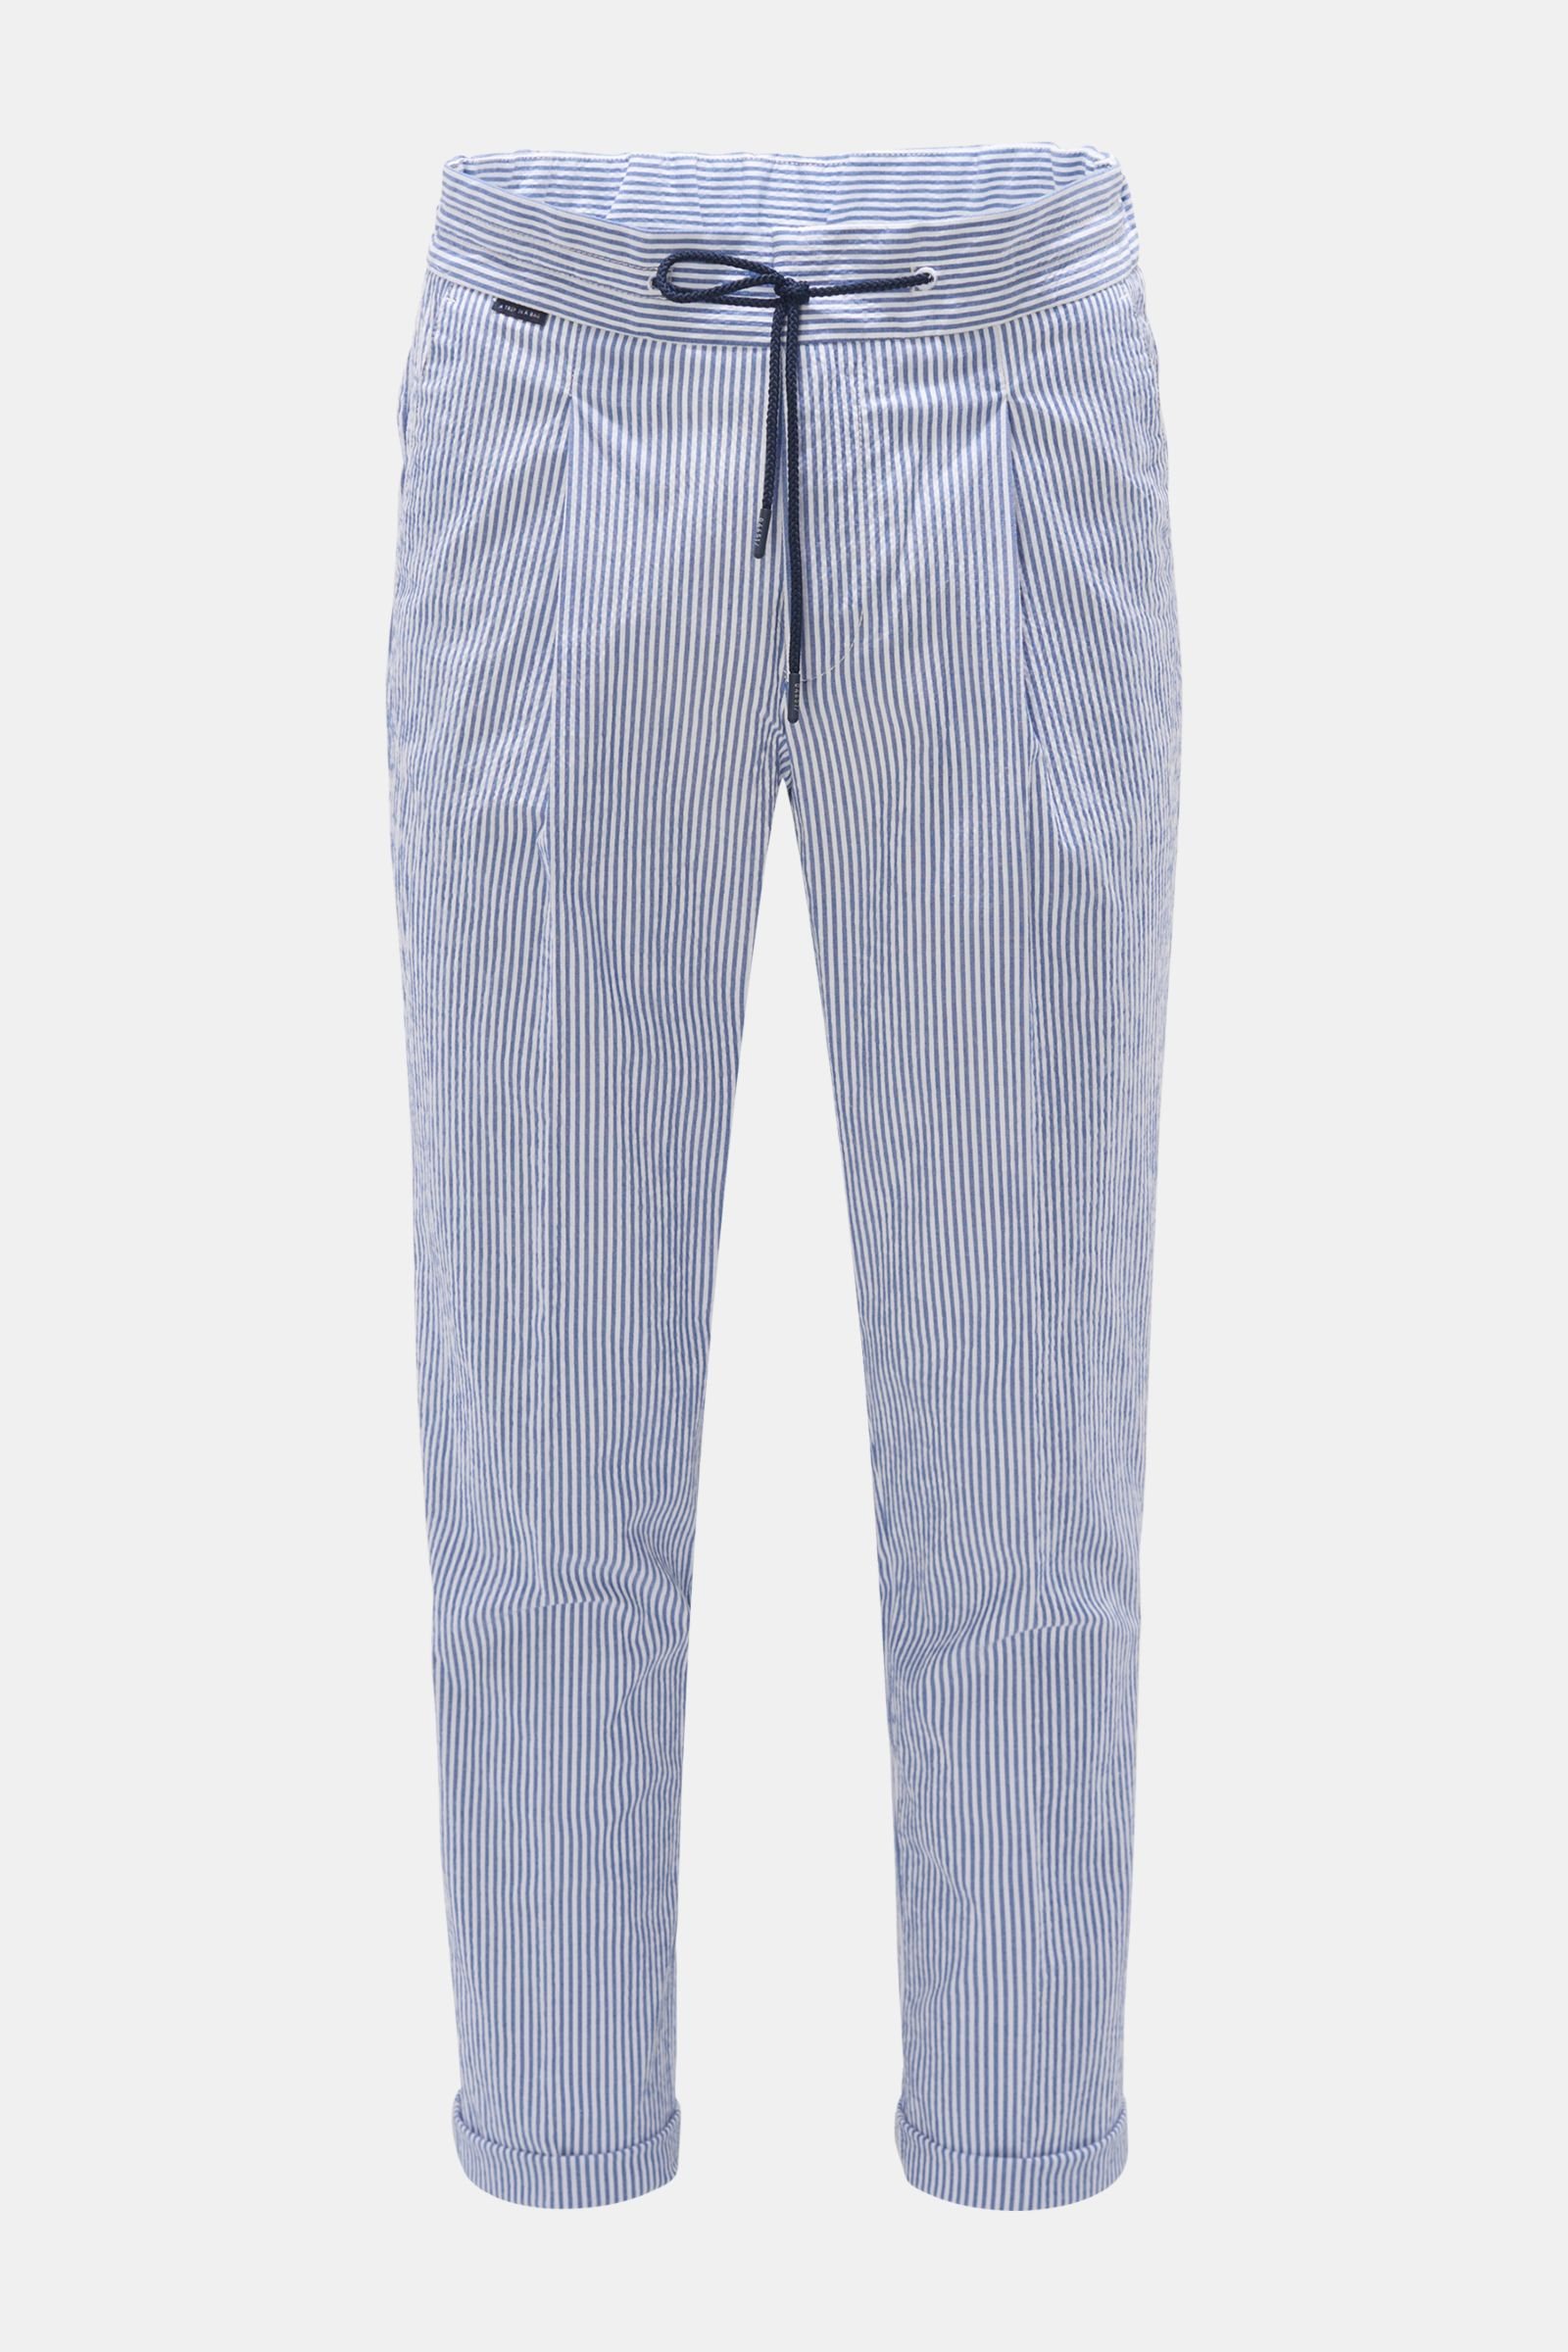 Seersucker jogger pants 'Seersucker Pleated Pant' grey-blue/white striped